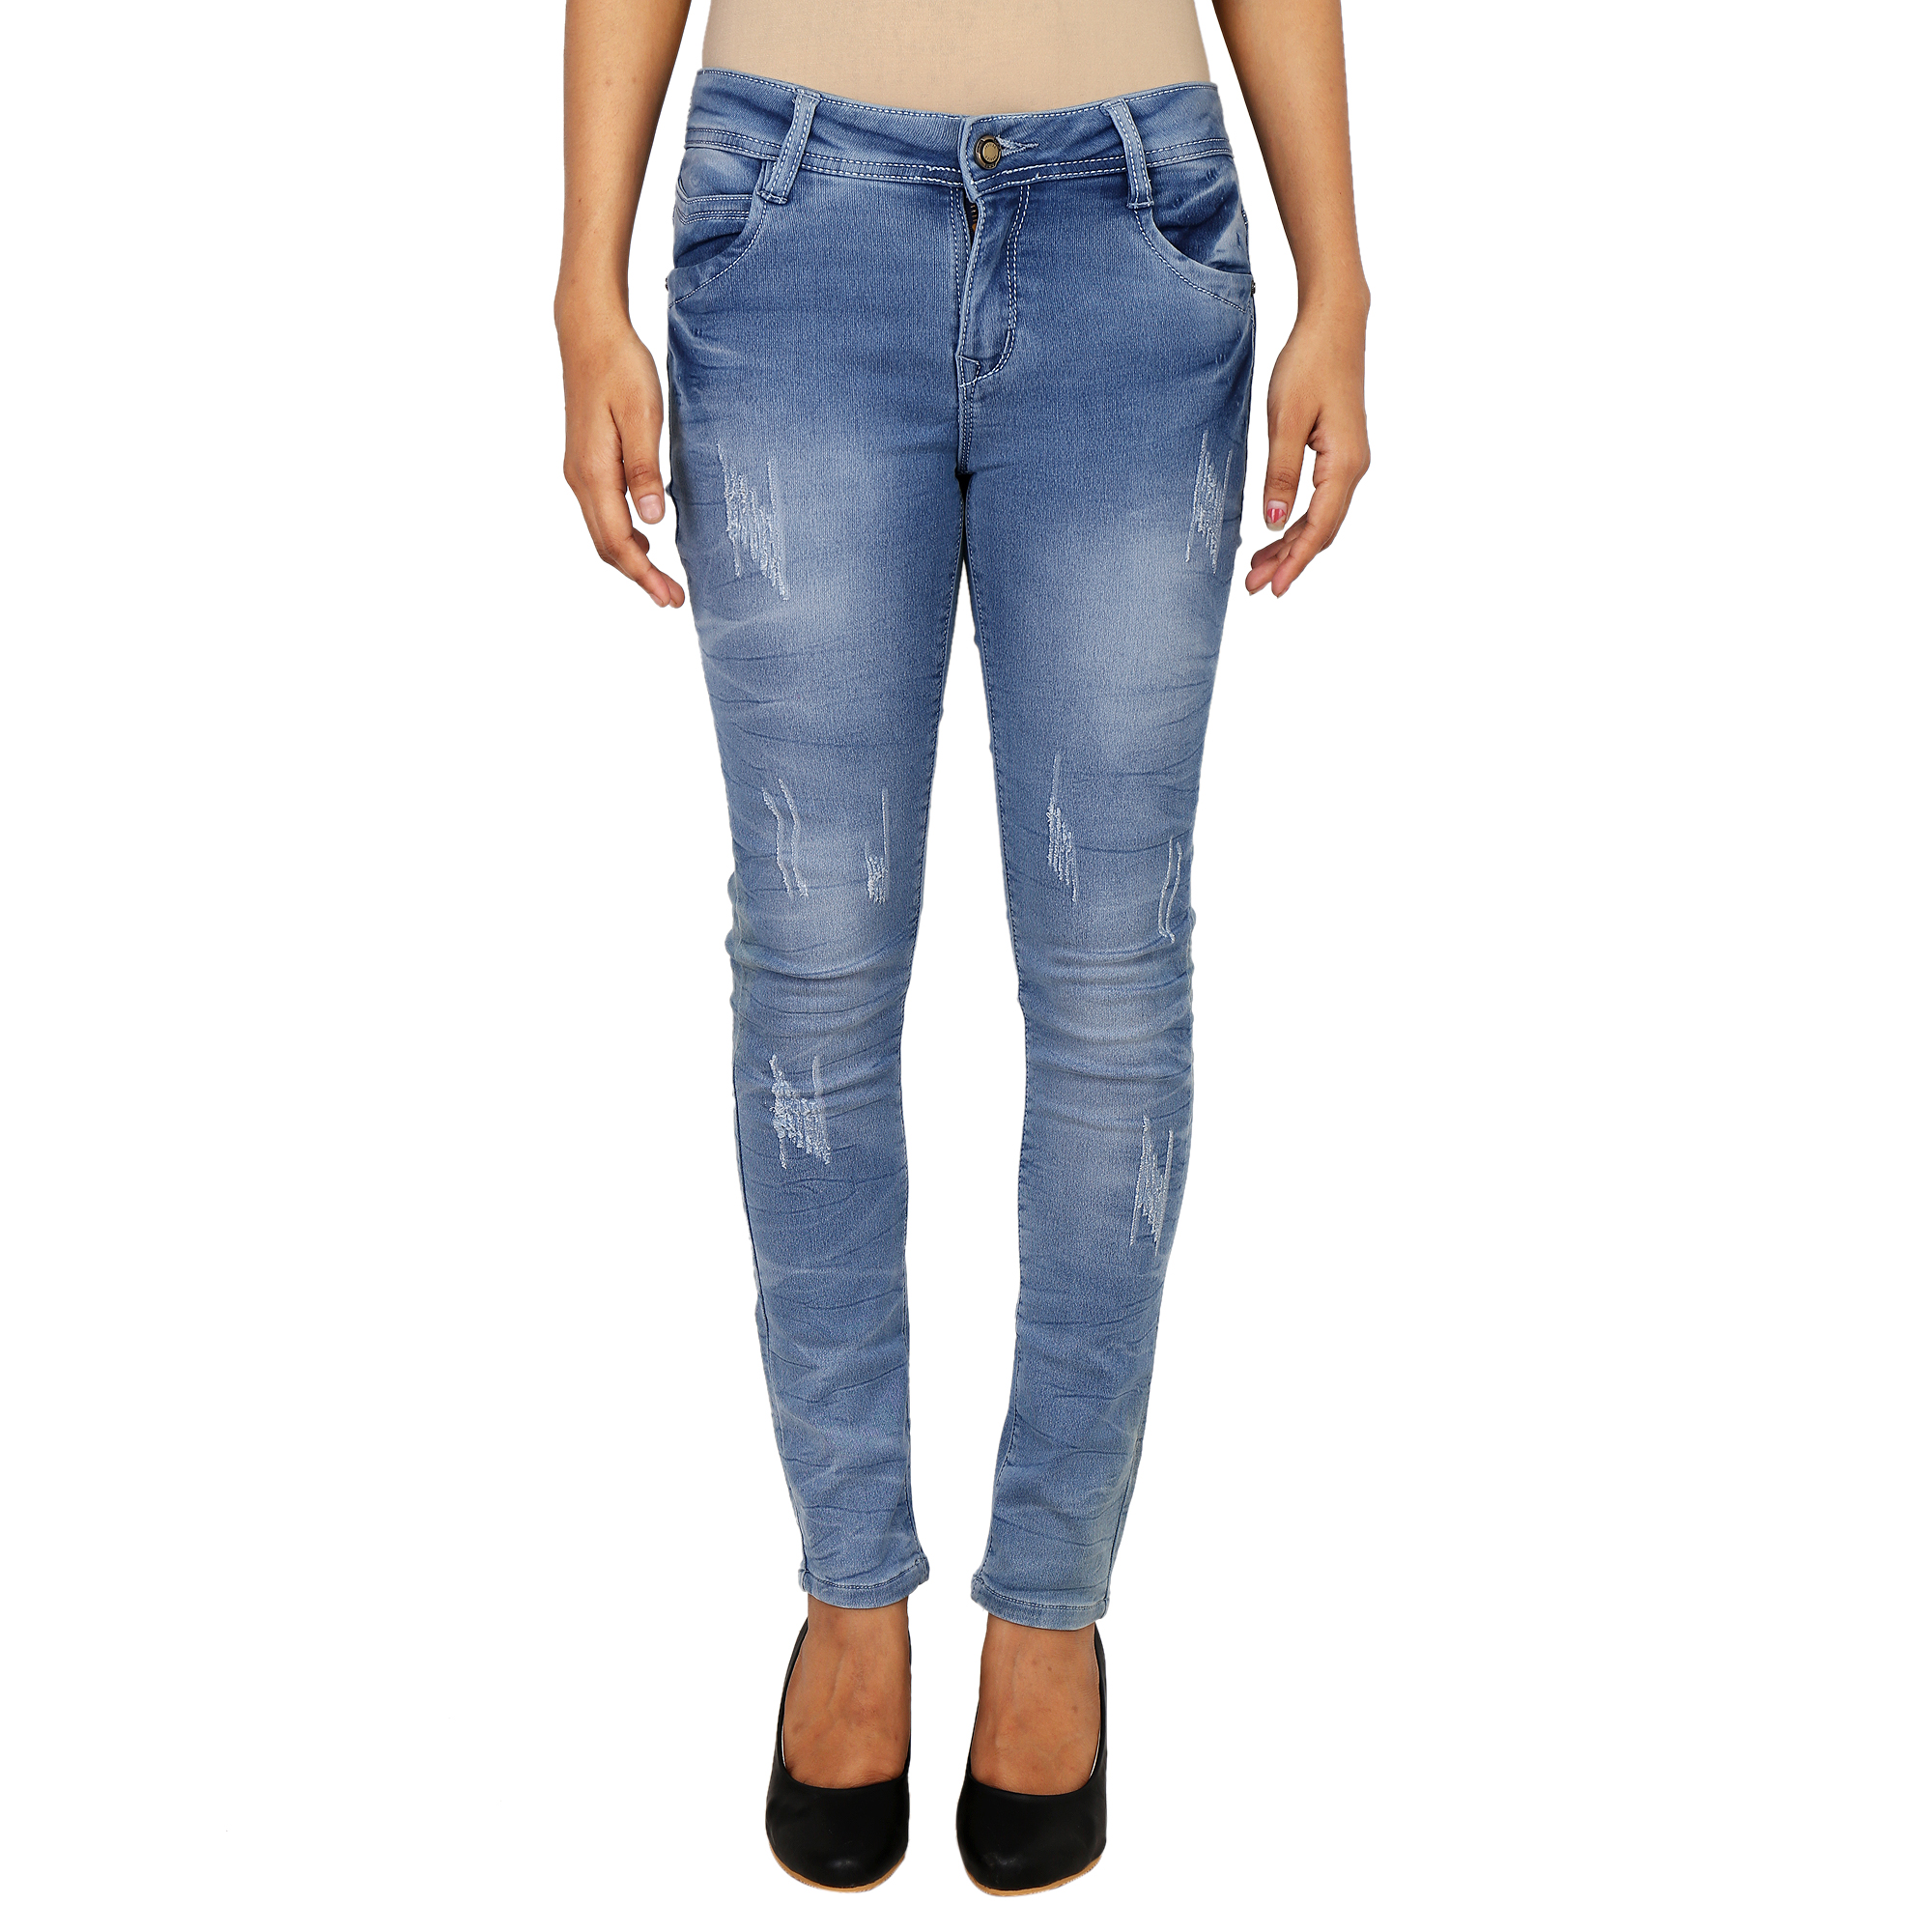 Buy Immense regular slim skinny fit fashionable women's jeans joggers ...